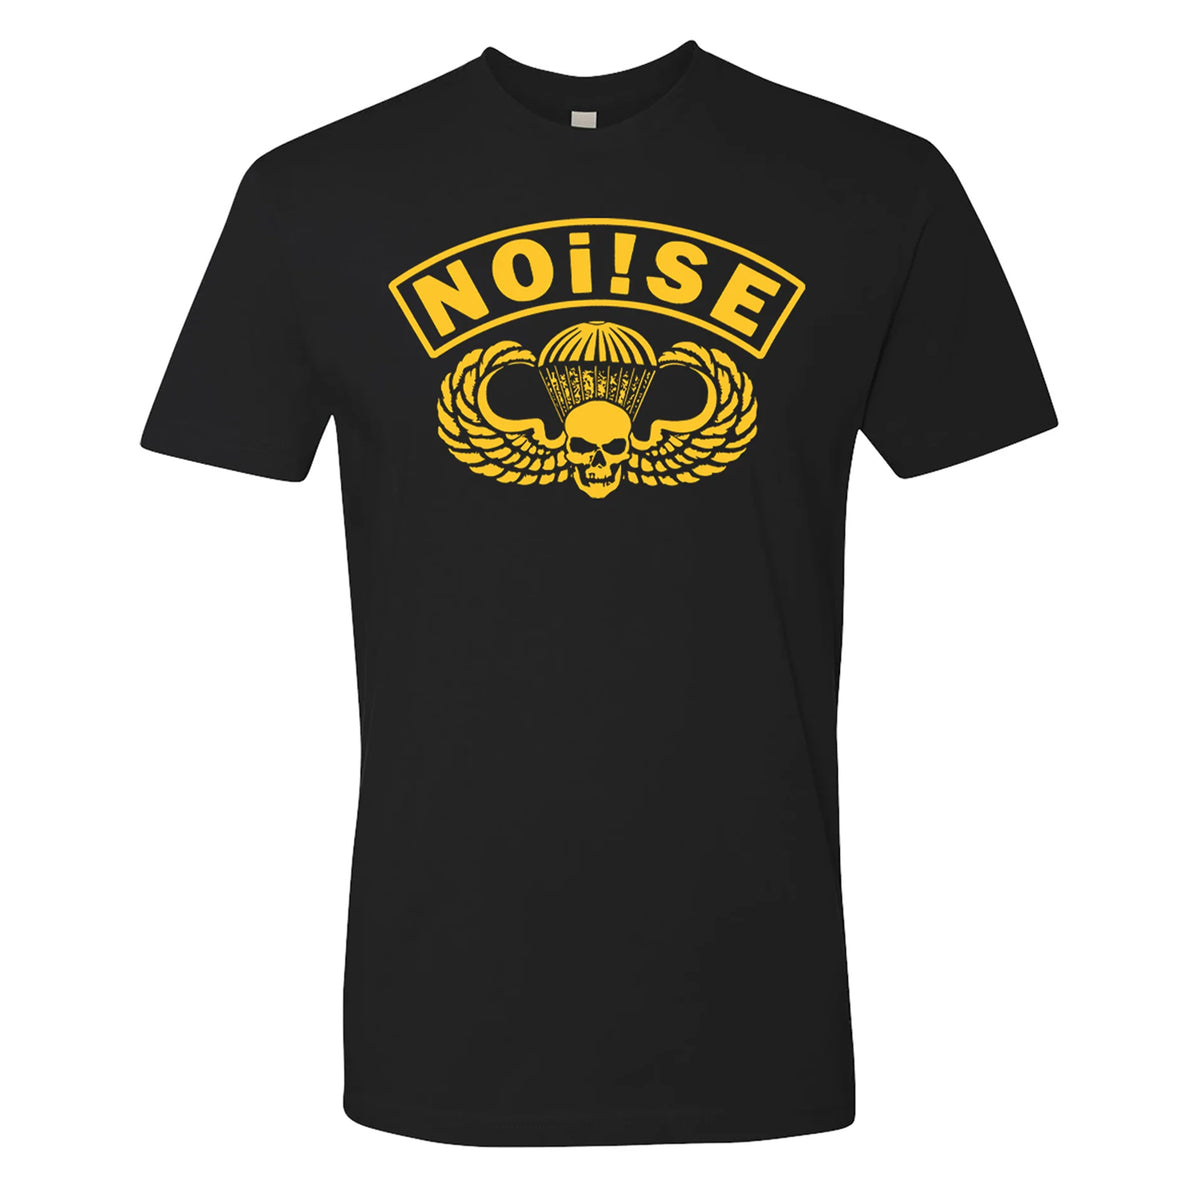 NOi!SE - Parachute Logo Yellow On Black T-Shirt